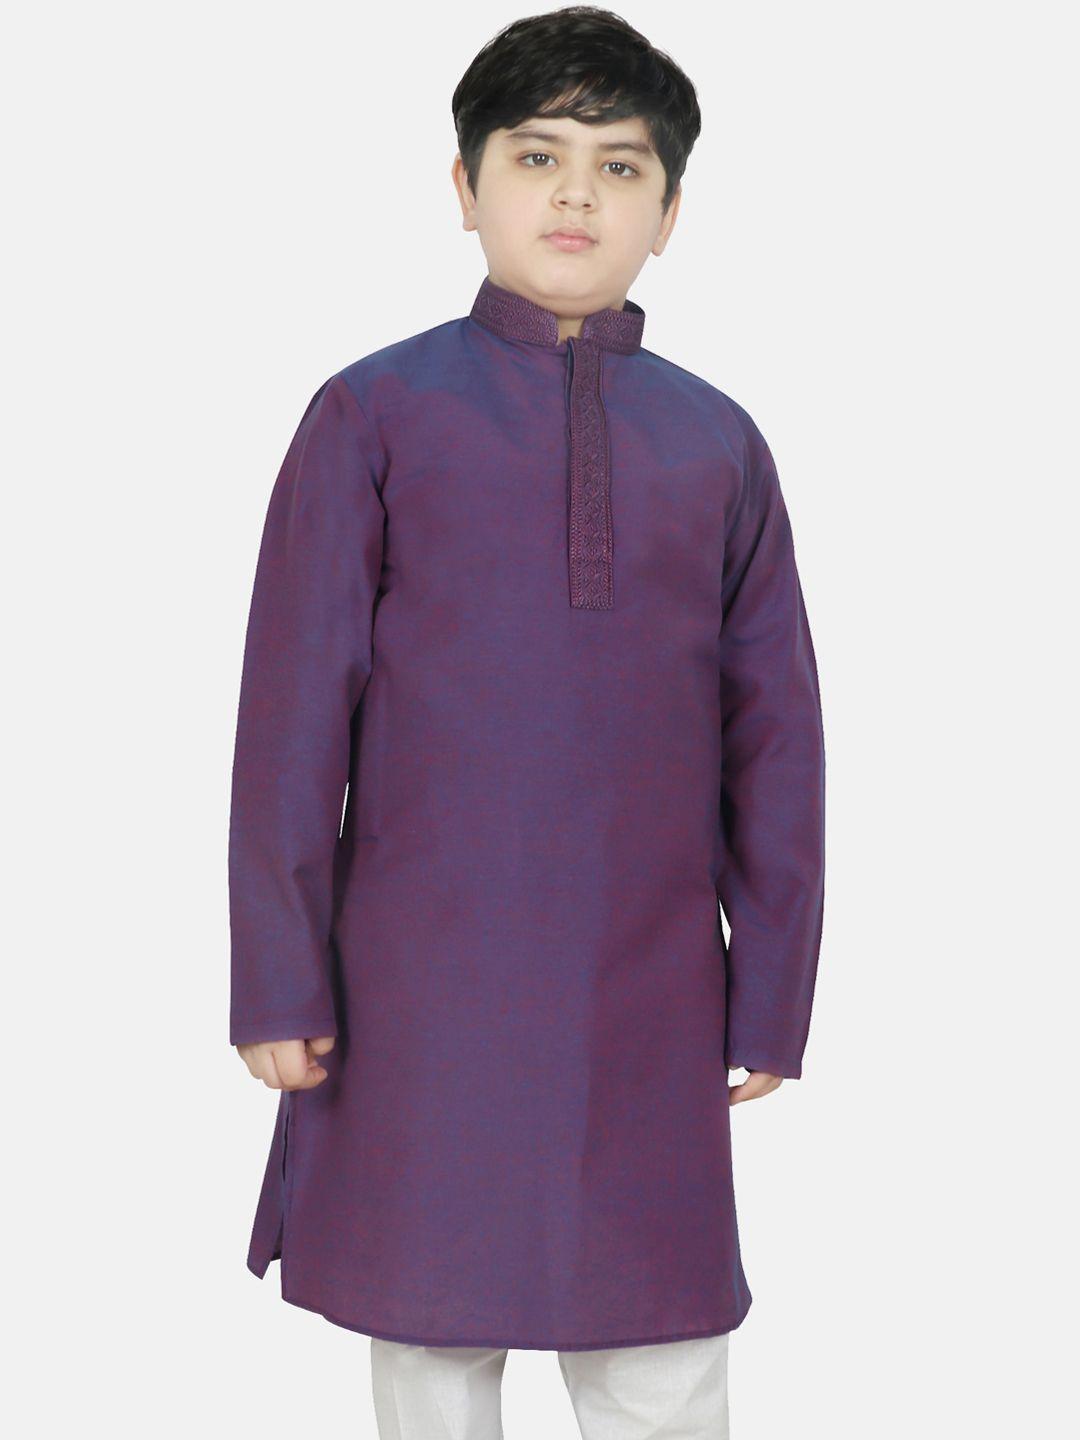 sg-yuvraj-boys-purple-kurta-with-embroidered-neck-detail